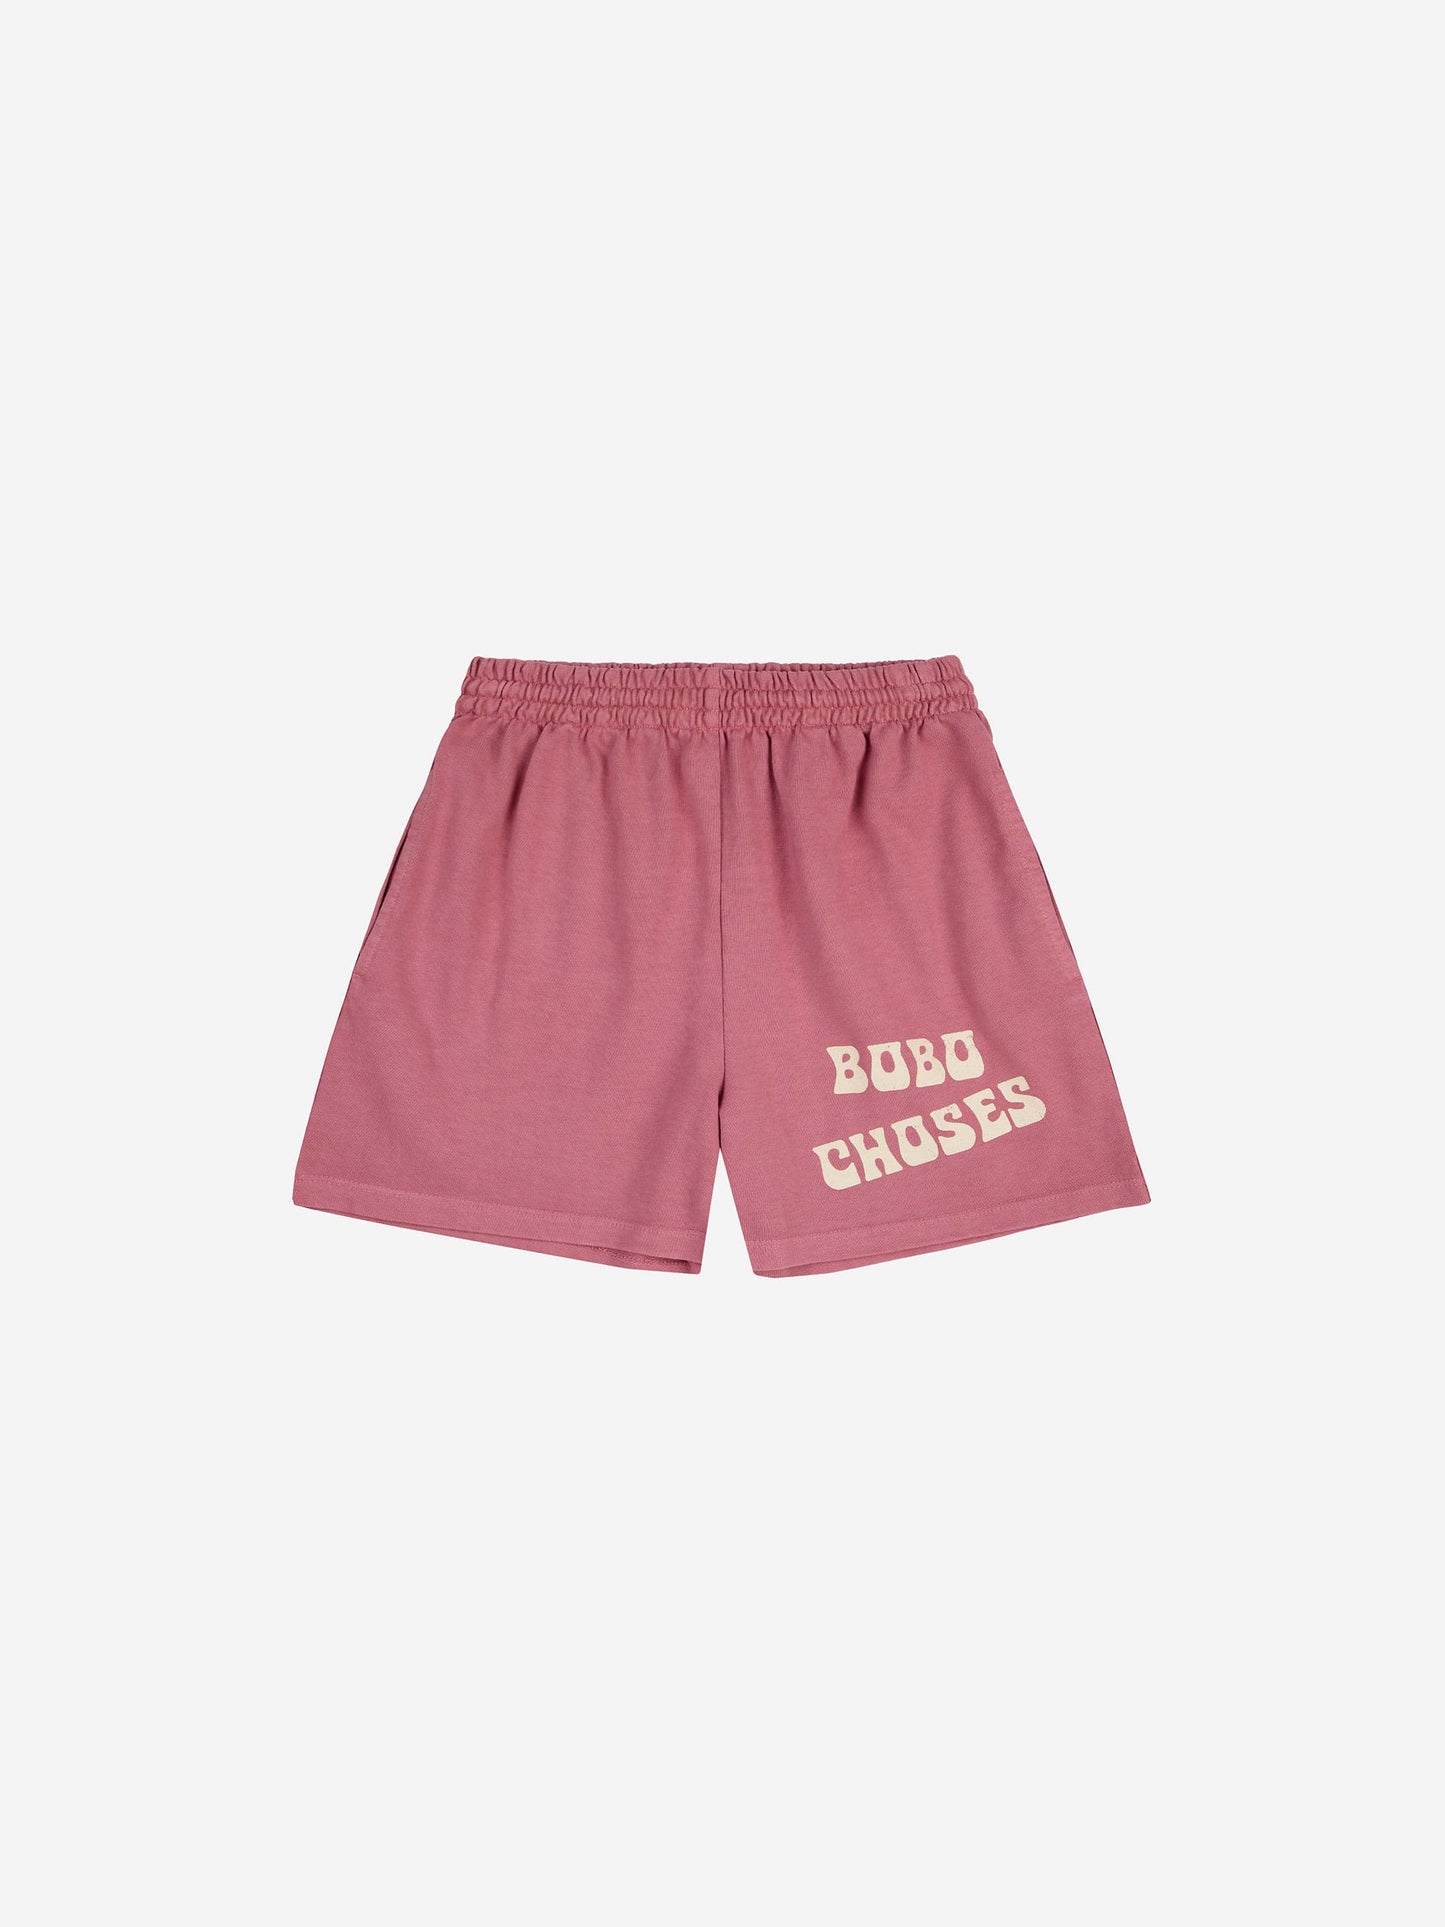 Bobo Choses shorts